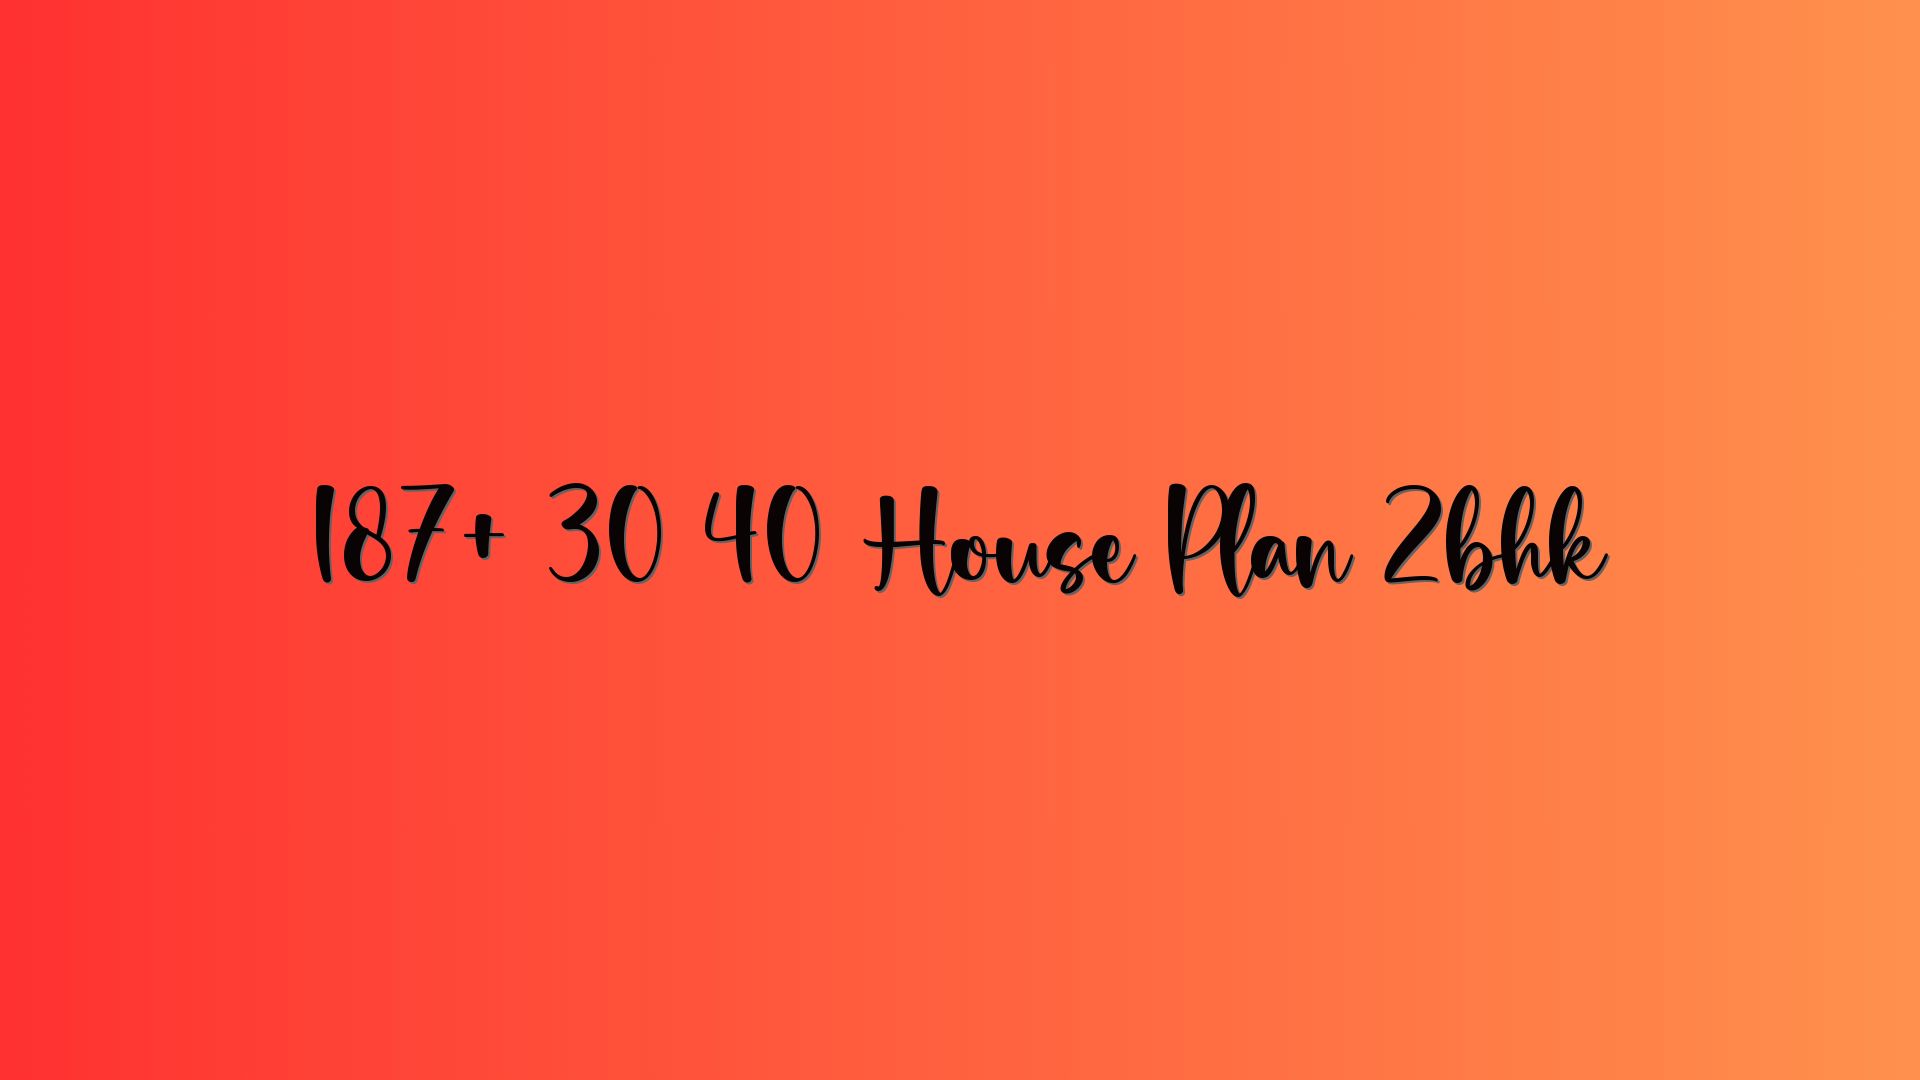 187+ 30 40 House Plan 2bhk